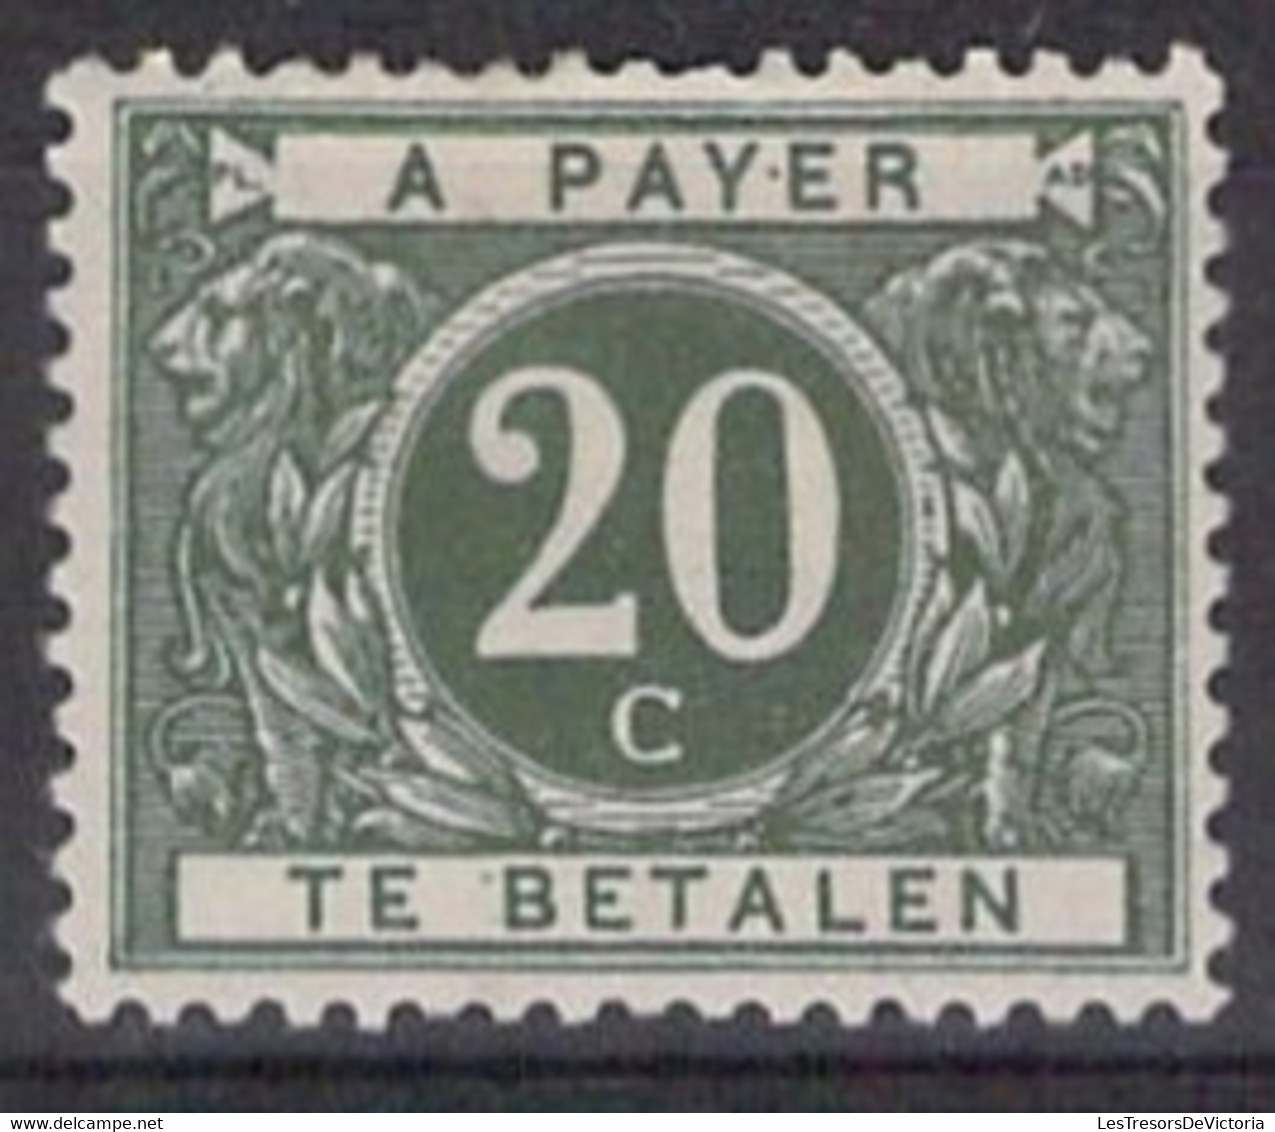 Belgique - COB TX 14 * - Beau Centrage - 1916 - Cote 150 COB 2022 - Timbres